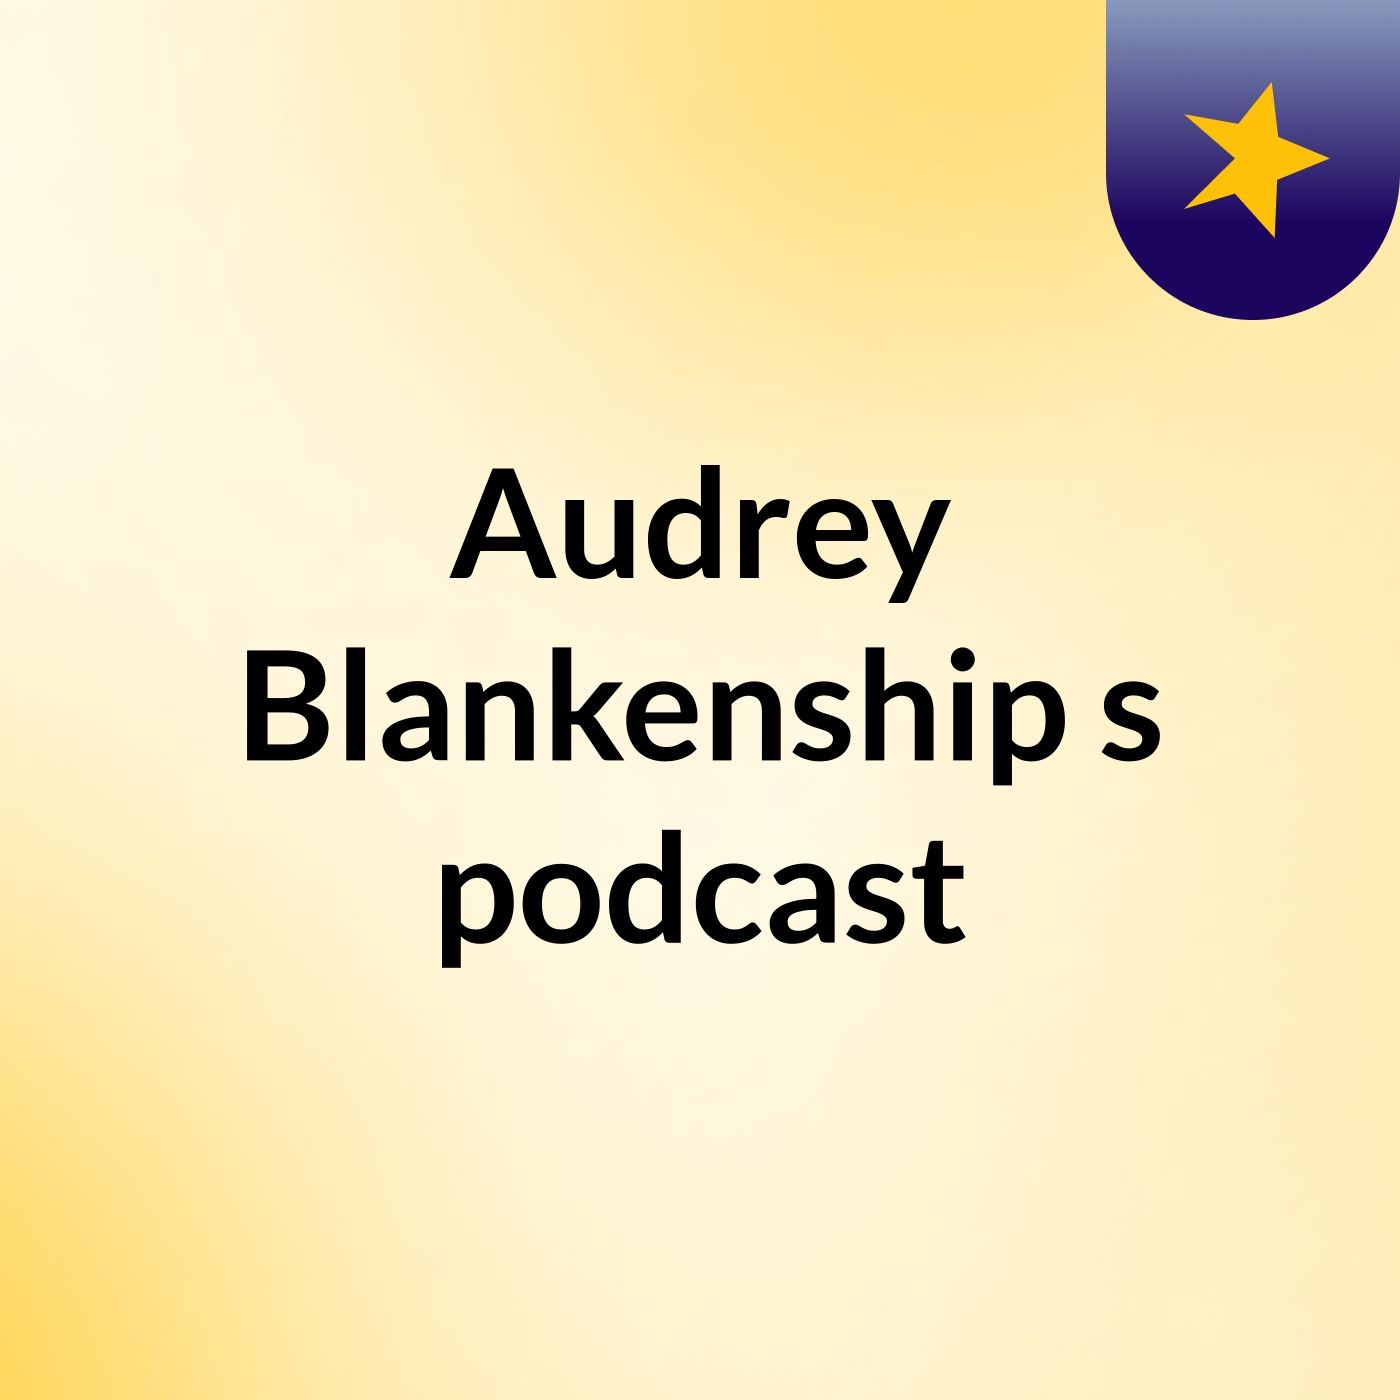 Audrey Blankenship's podcast